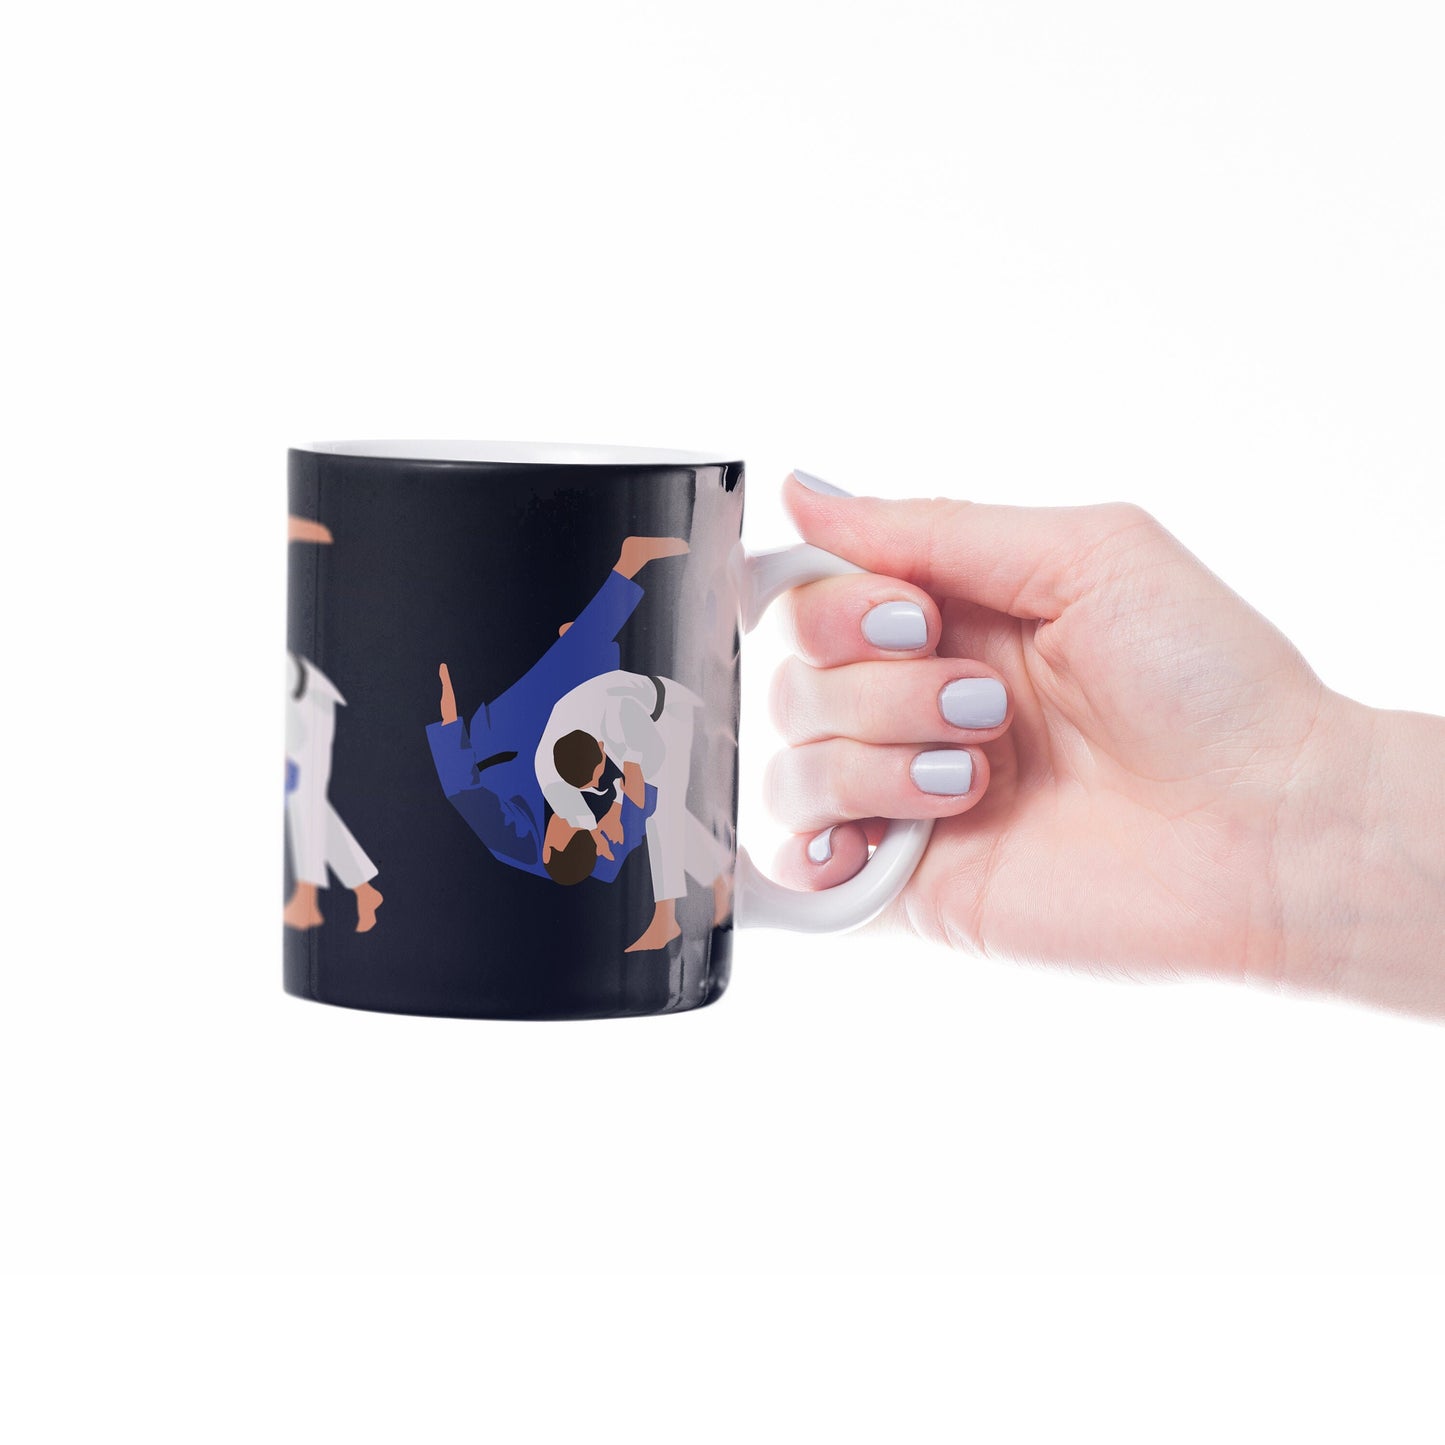 Judo cup or mug "The judoka" - Customizable